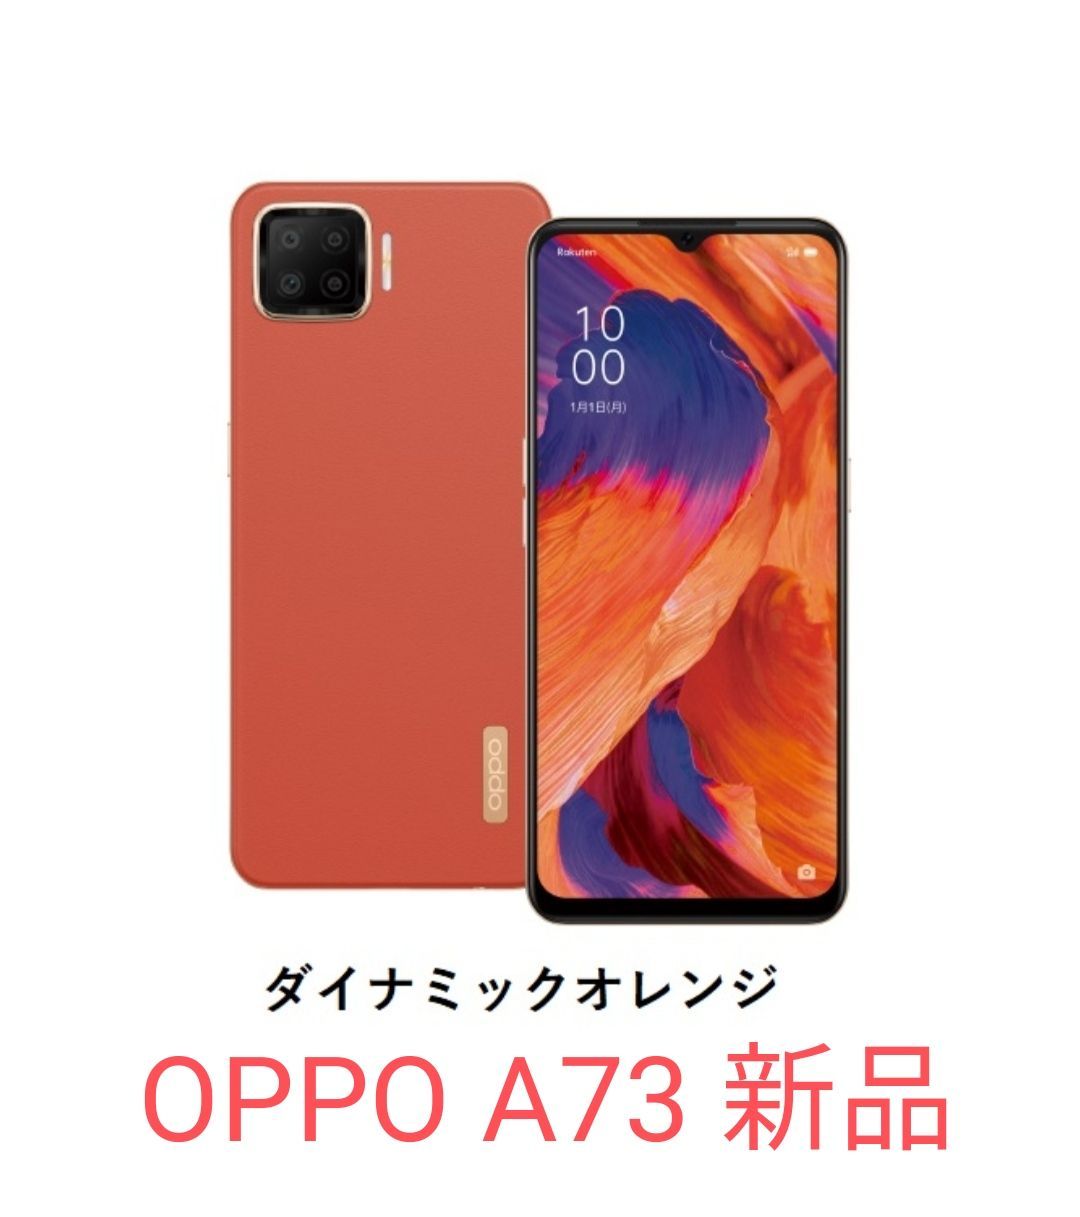 OPPO A73 楽天モバイル対応 simフリースマートフォン オレンジ ...